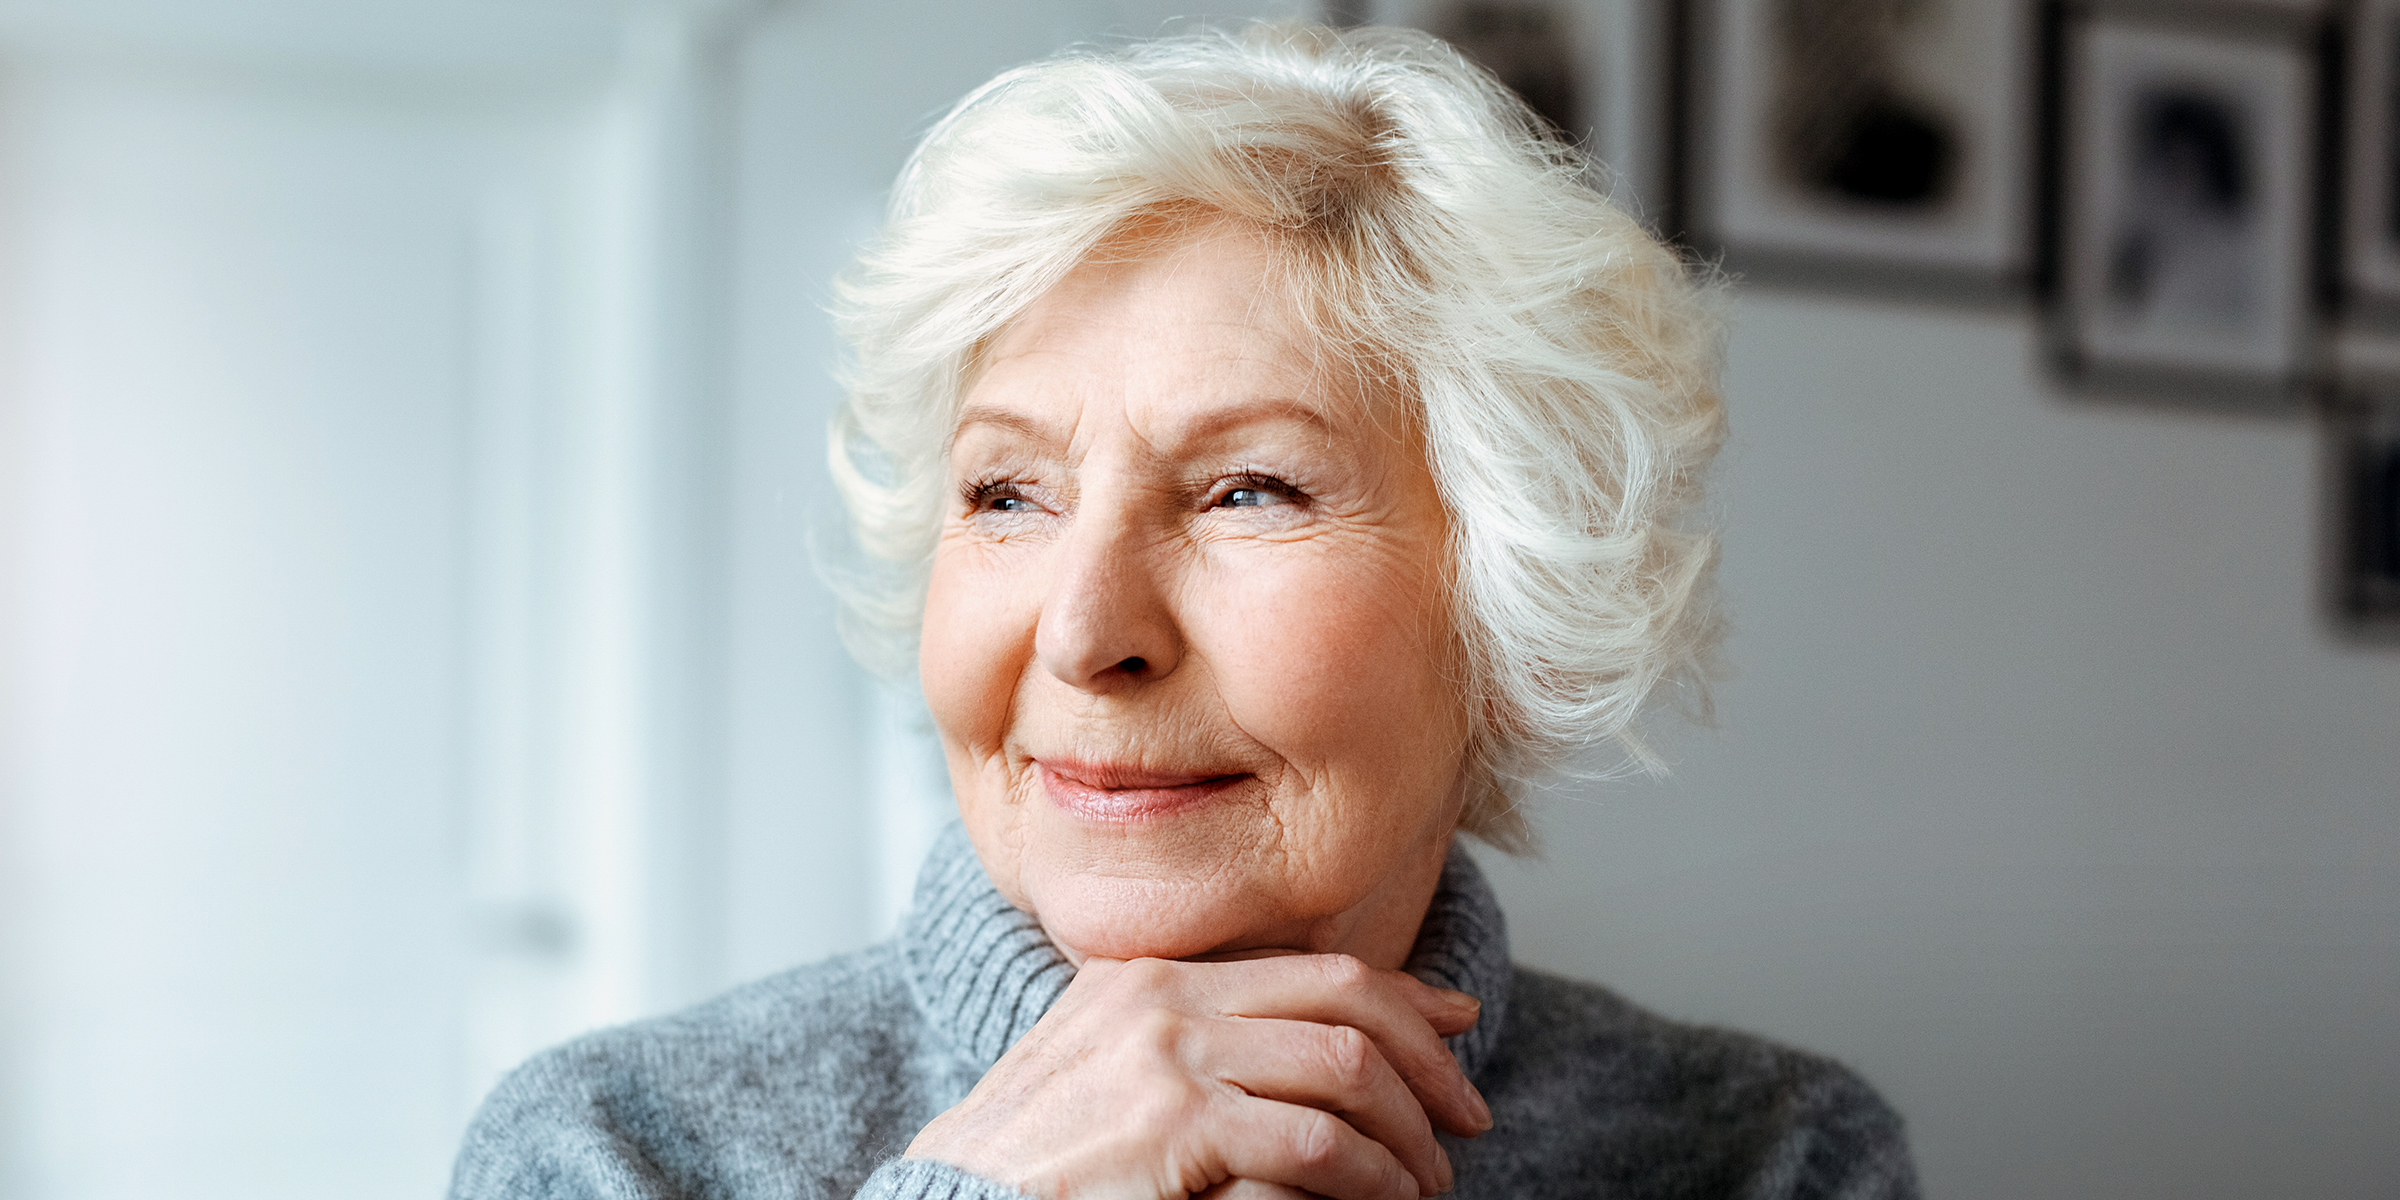 Une vieille femme souriante | Source : Shutterstock